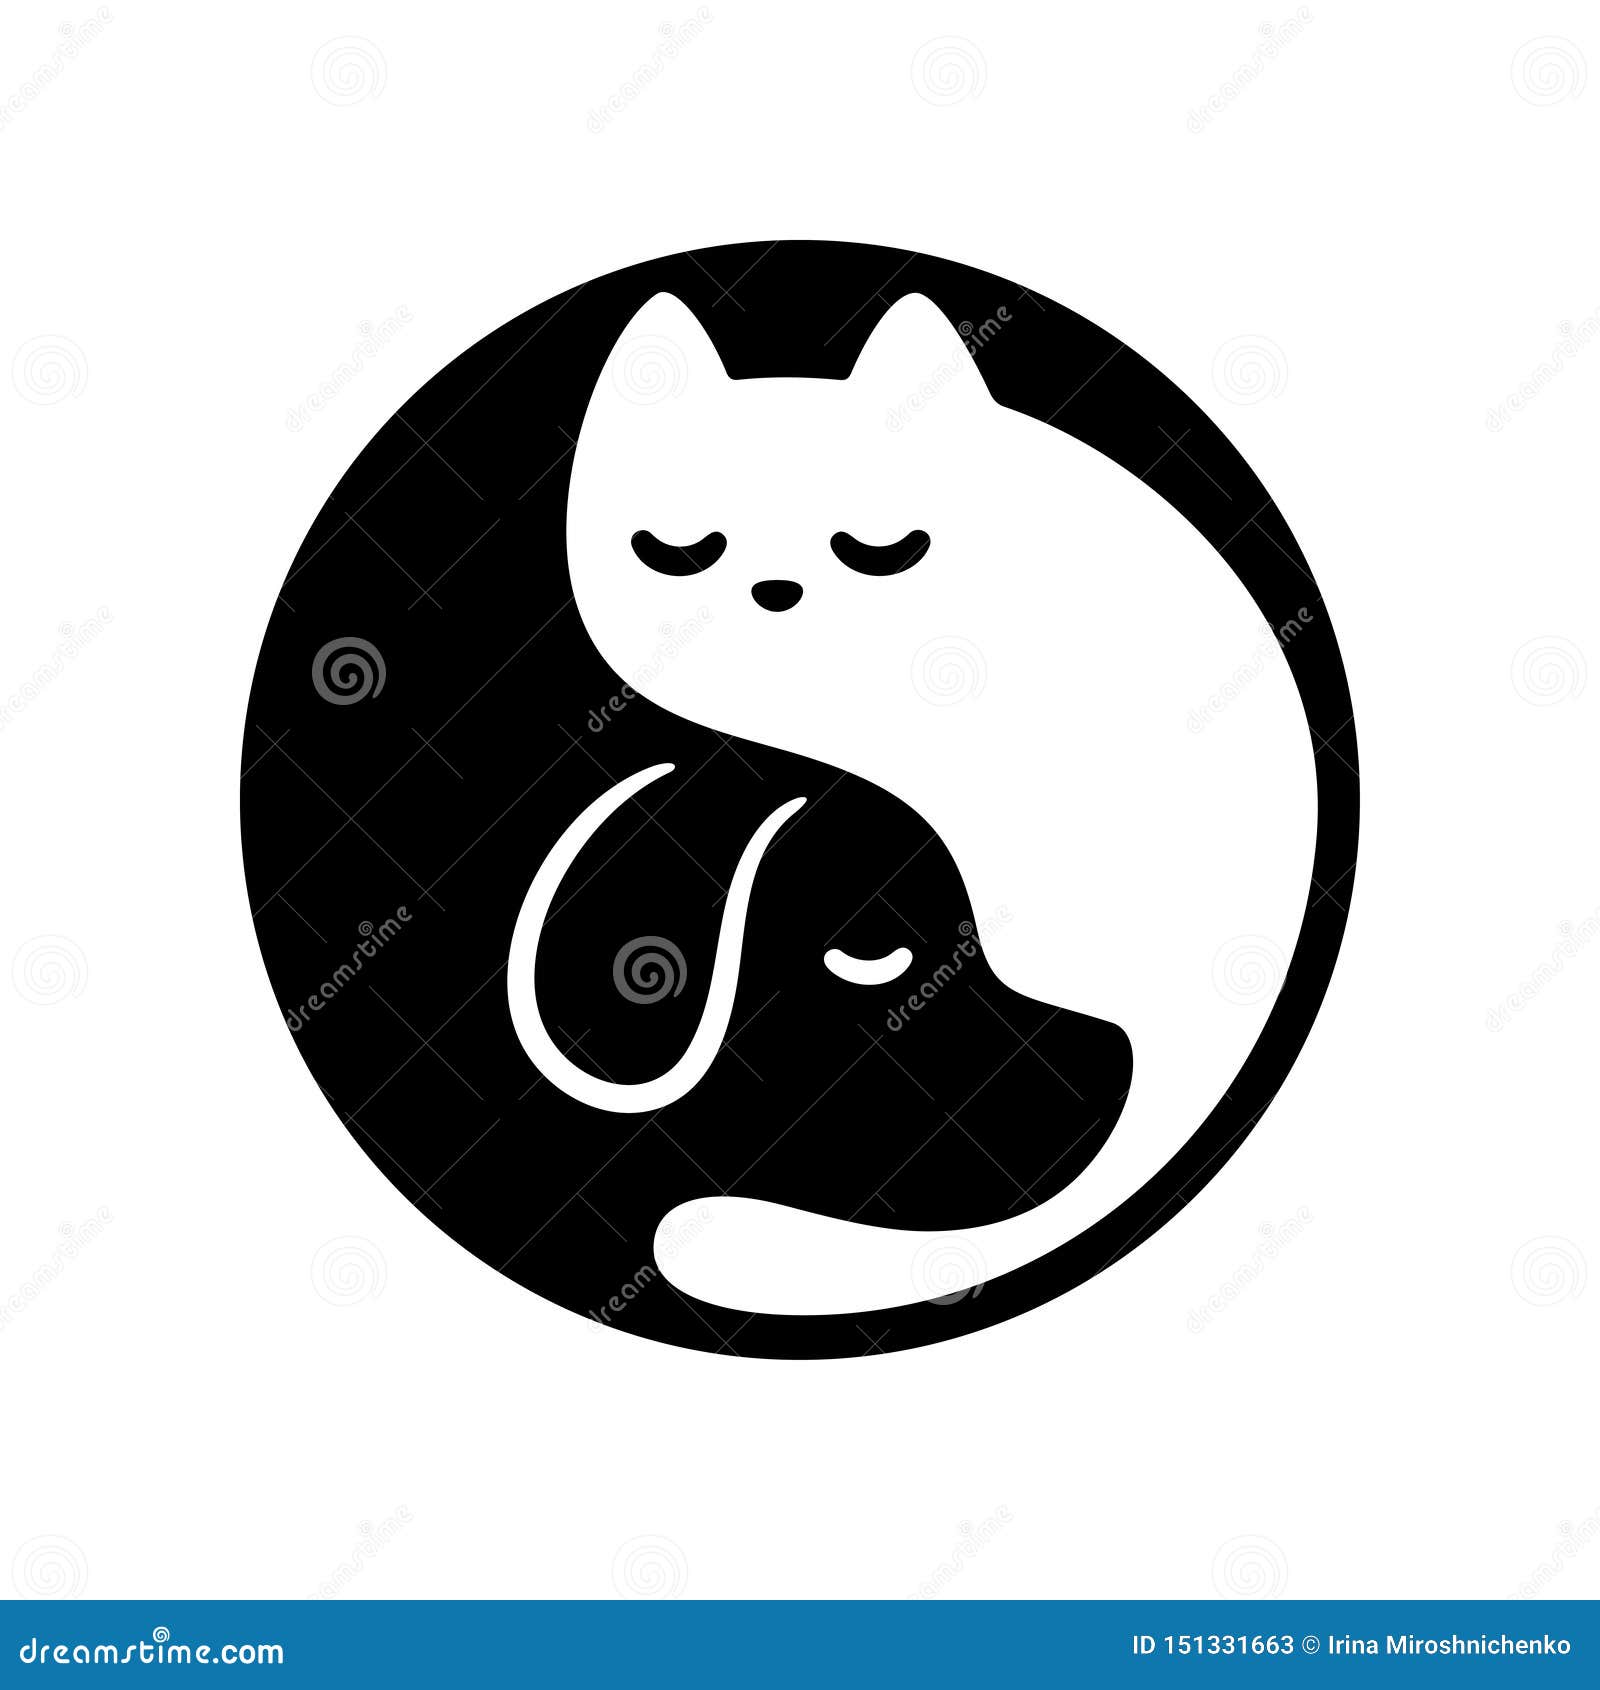 cat dog yin yang